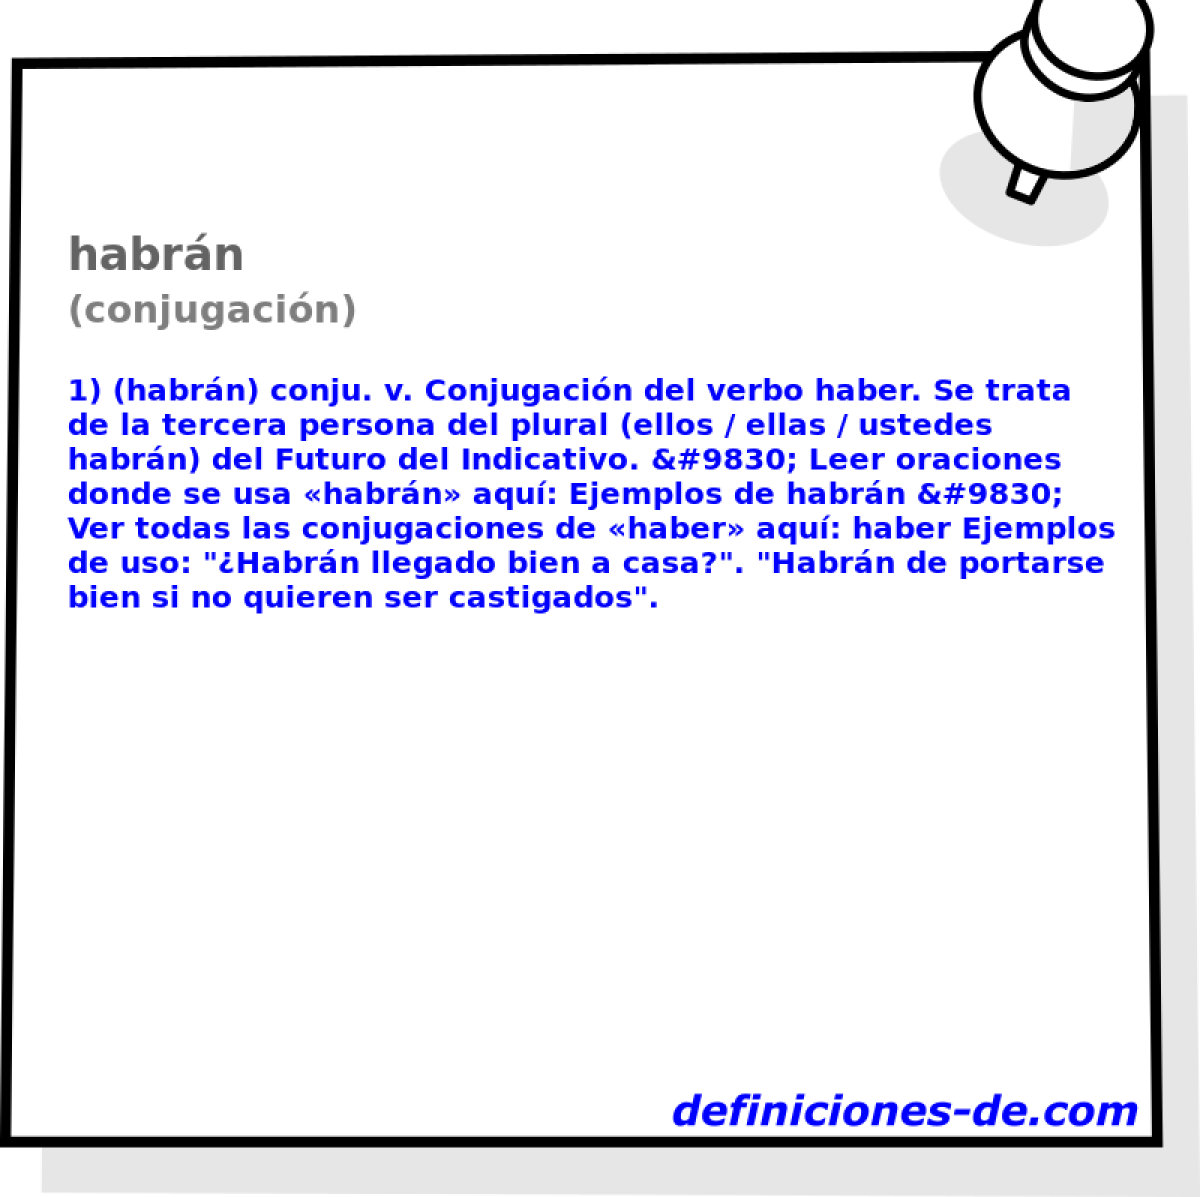 habrn (conjugacin)